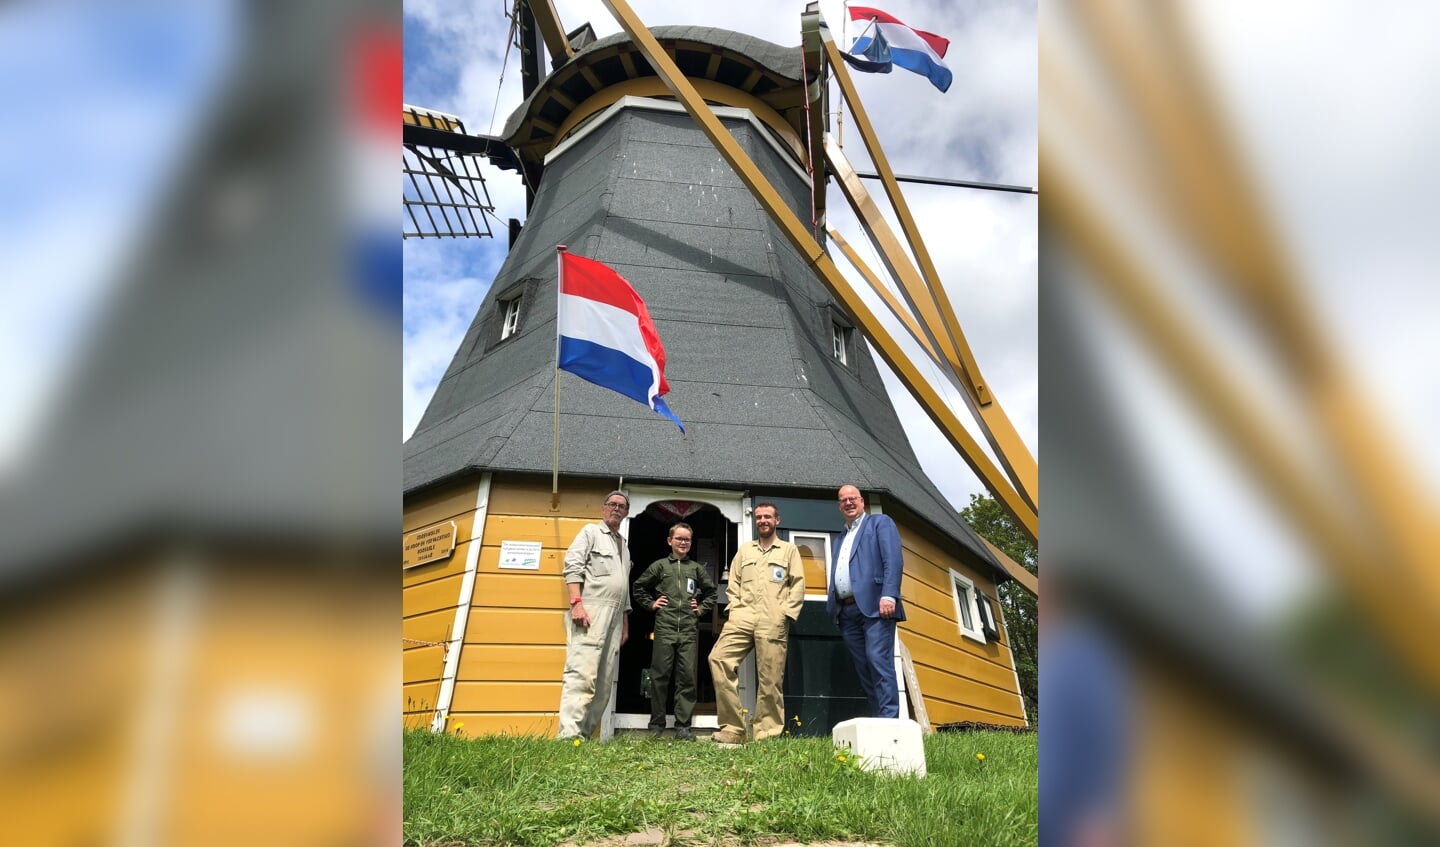 Pieter Hazelager, Jelmer Kot, Arjen Burger en Kees Weststrate